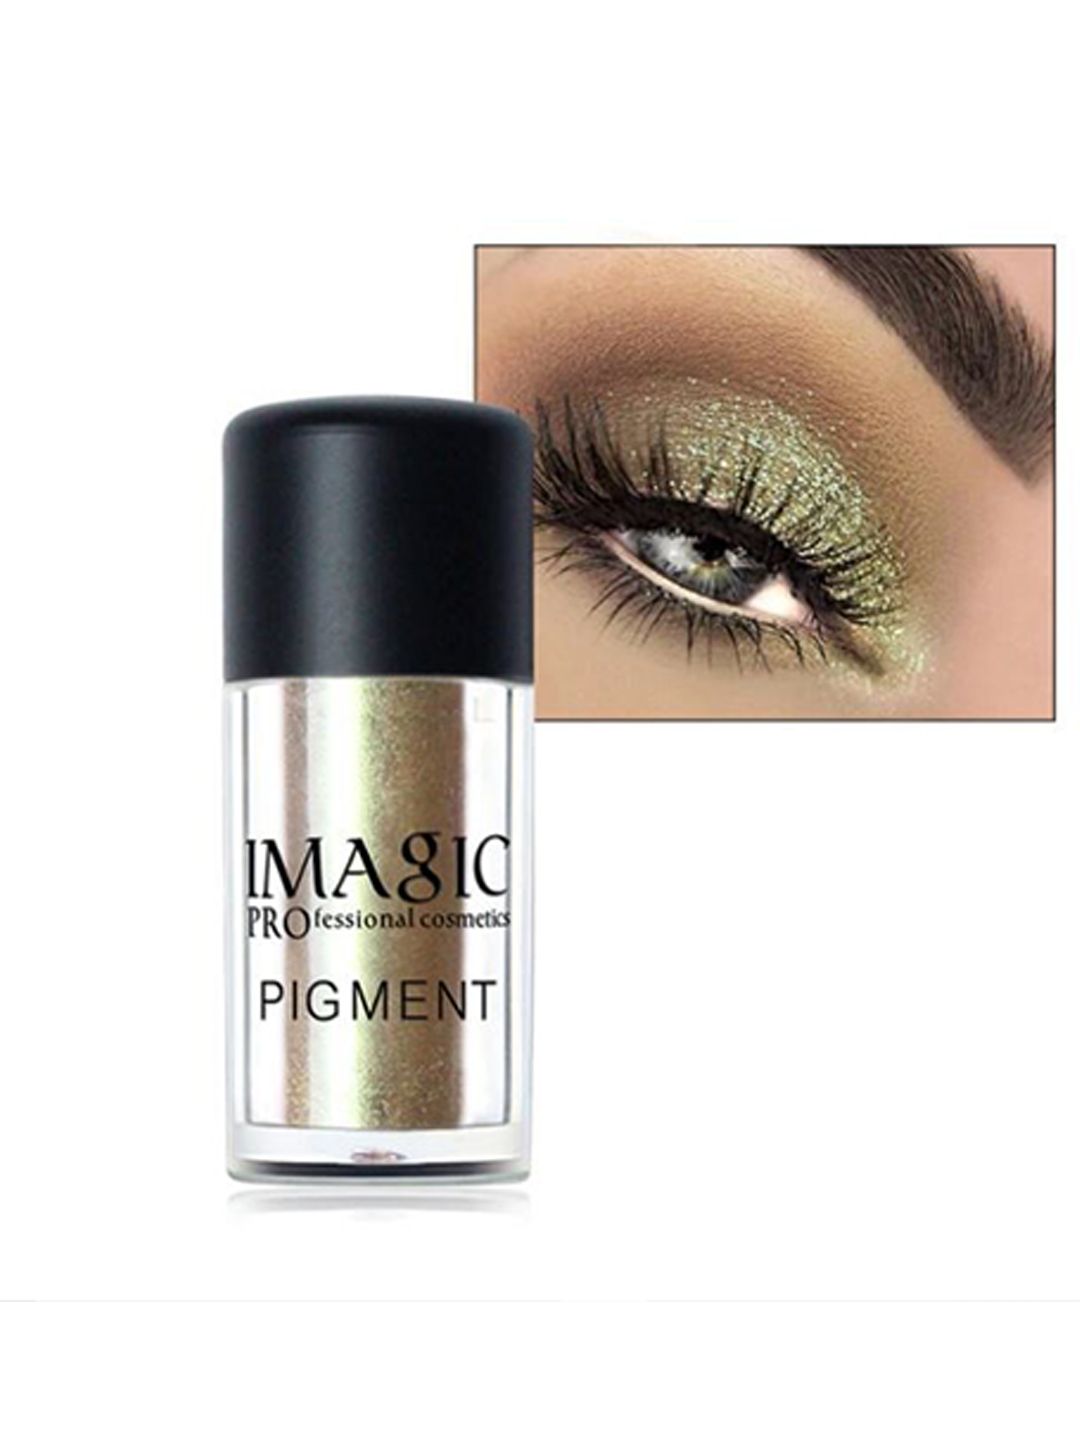 IMAGIC Professional Cosmetics Pigment Loose Powder Eye- Dazzling Price in India